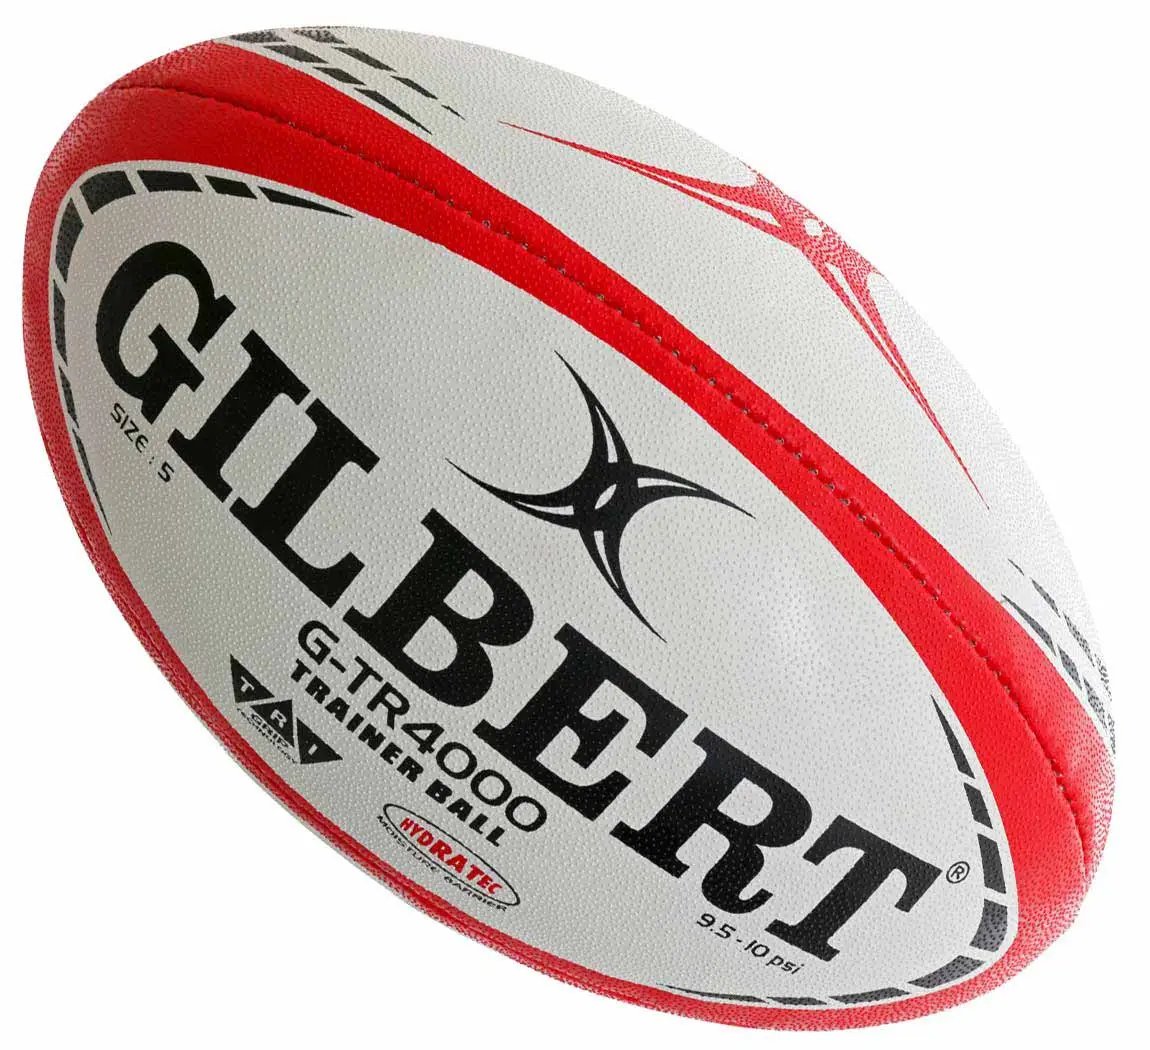 Gilbert GTR4000 Size 5 Rugby Training Ball